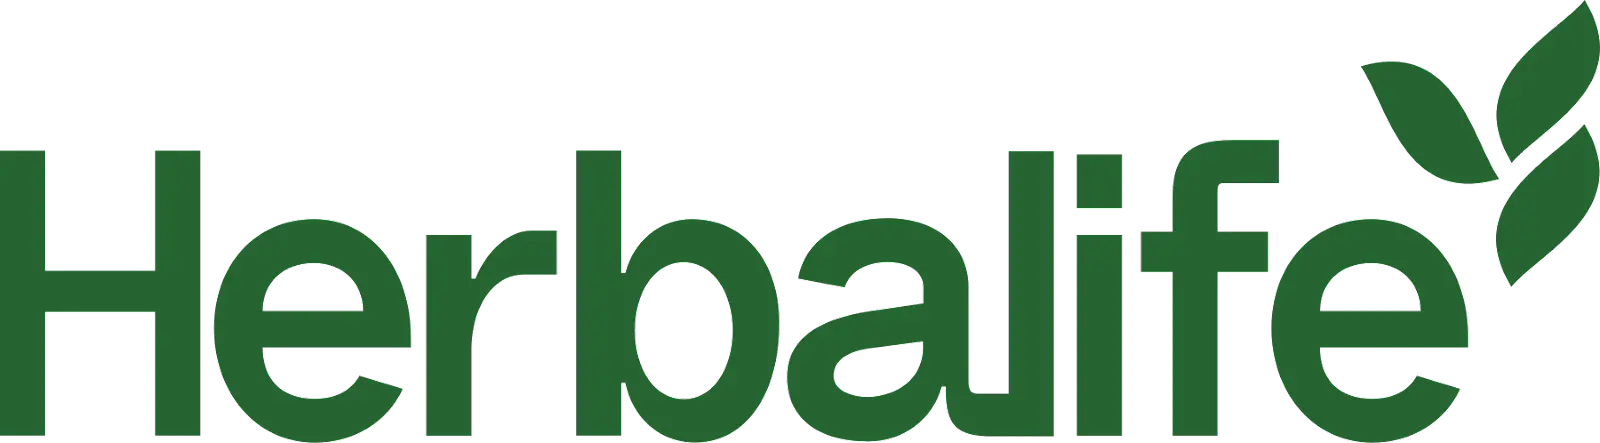 Herbalife MLM Company Logo